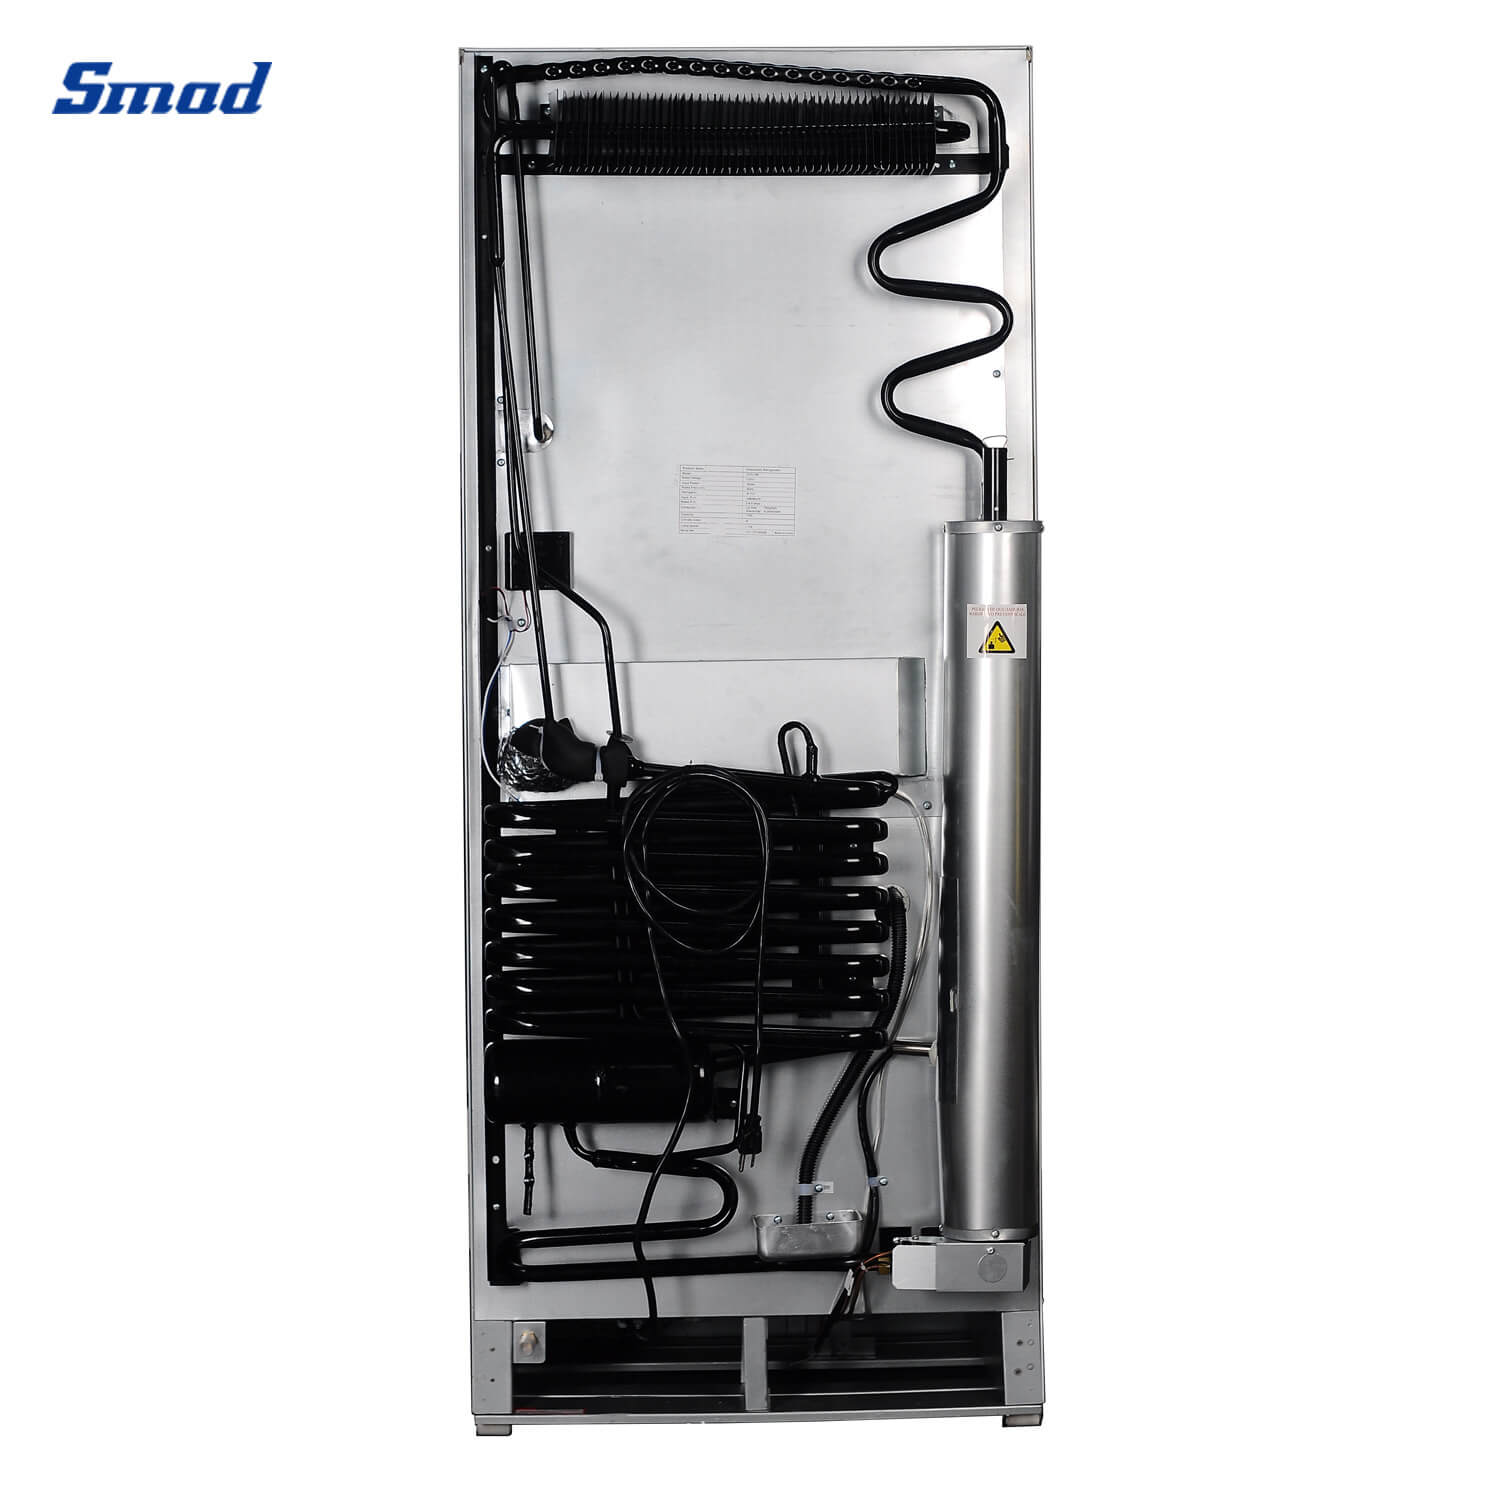 
Smad 275L Gas / Propane Top Freezer Absorption Fridge Freezer with 2-way power supply